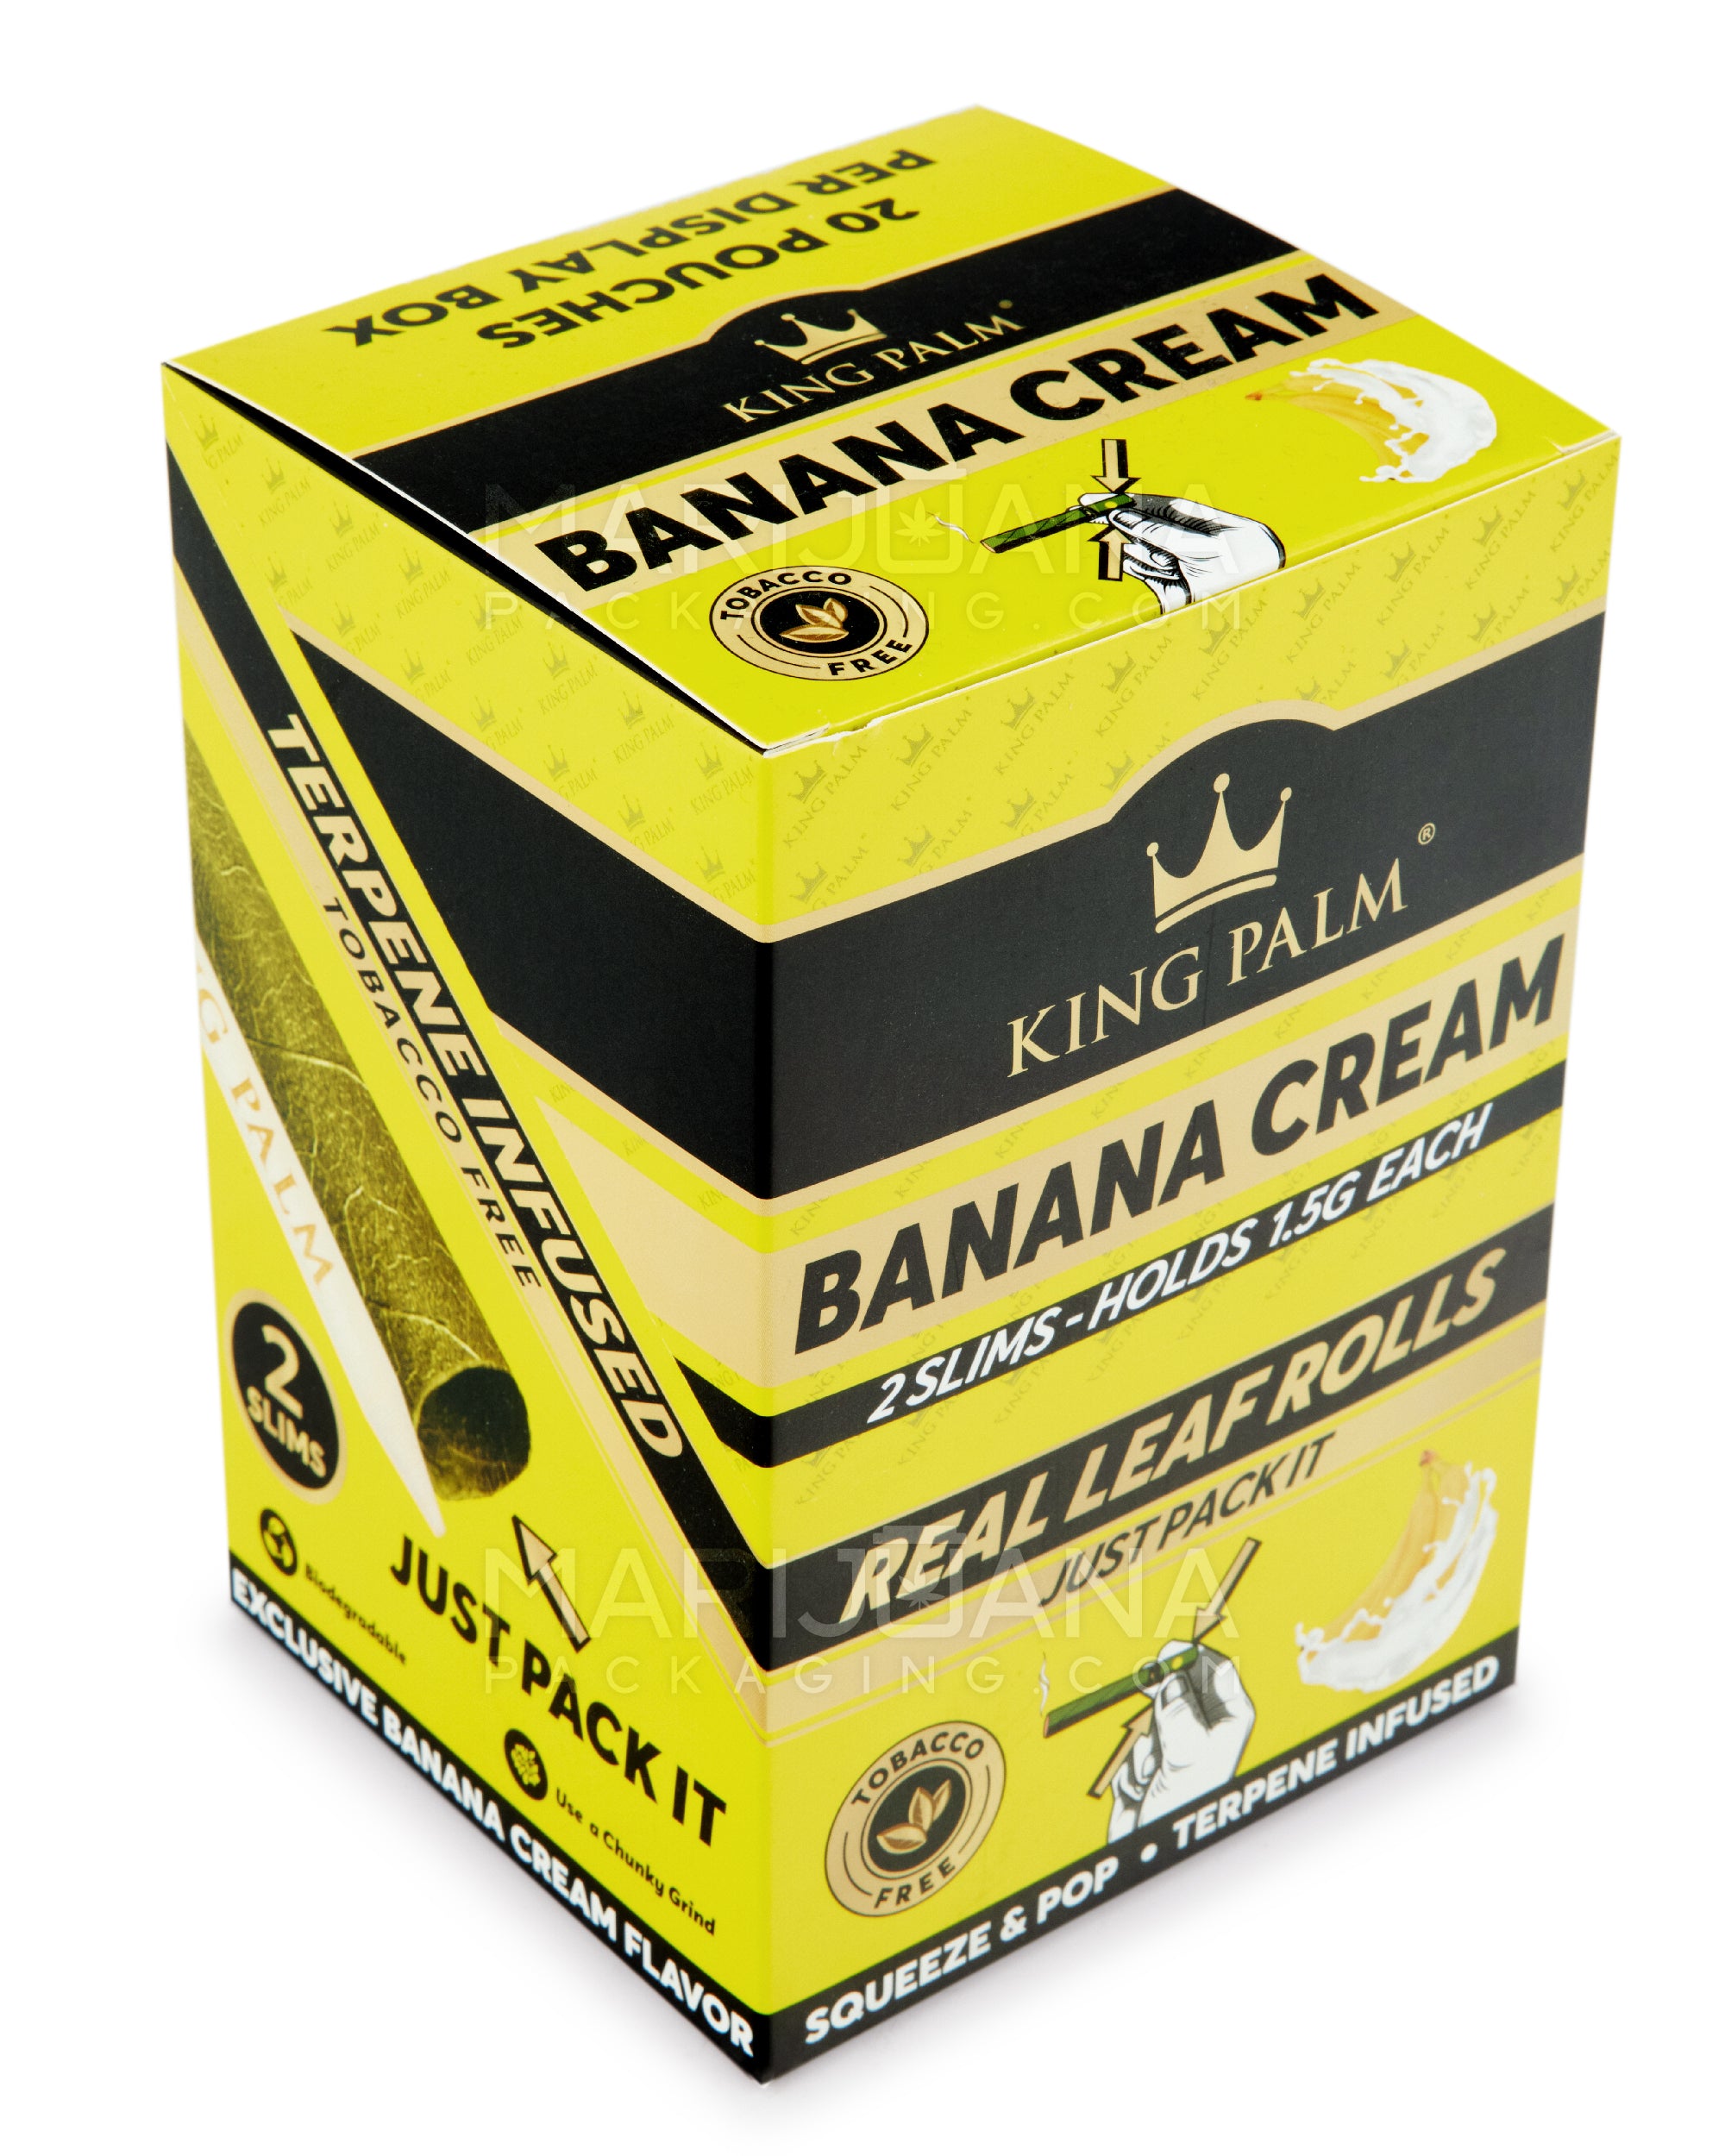 KING PALM | 'Retail Display' Natural Leaf Slim Rolls Blunt Wraps | 100mm - Banana Cream - 20 Count - 2